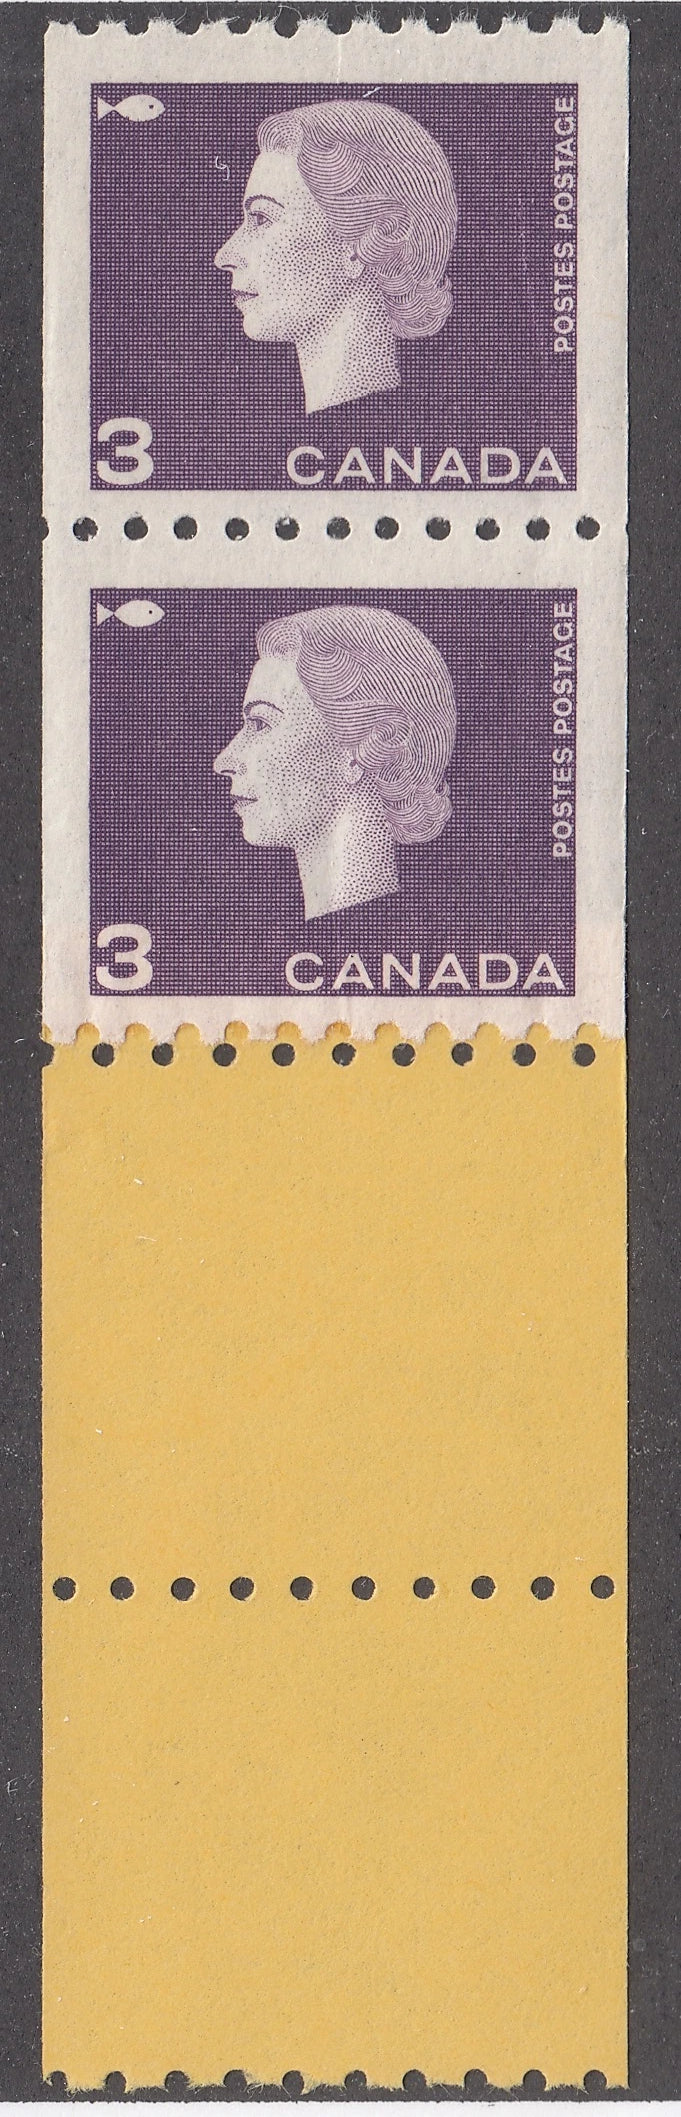 0407CA2103 - Canada #407 - Mint Coil Pair Starter